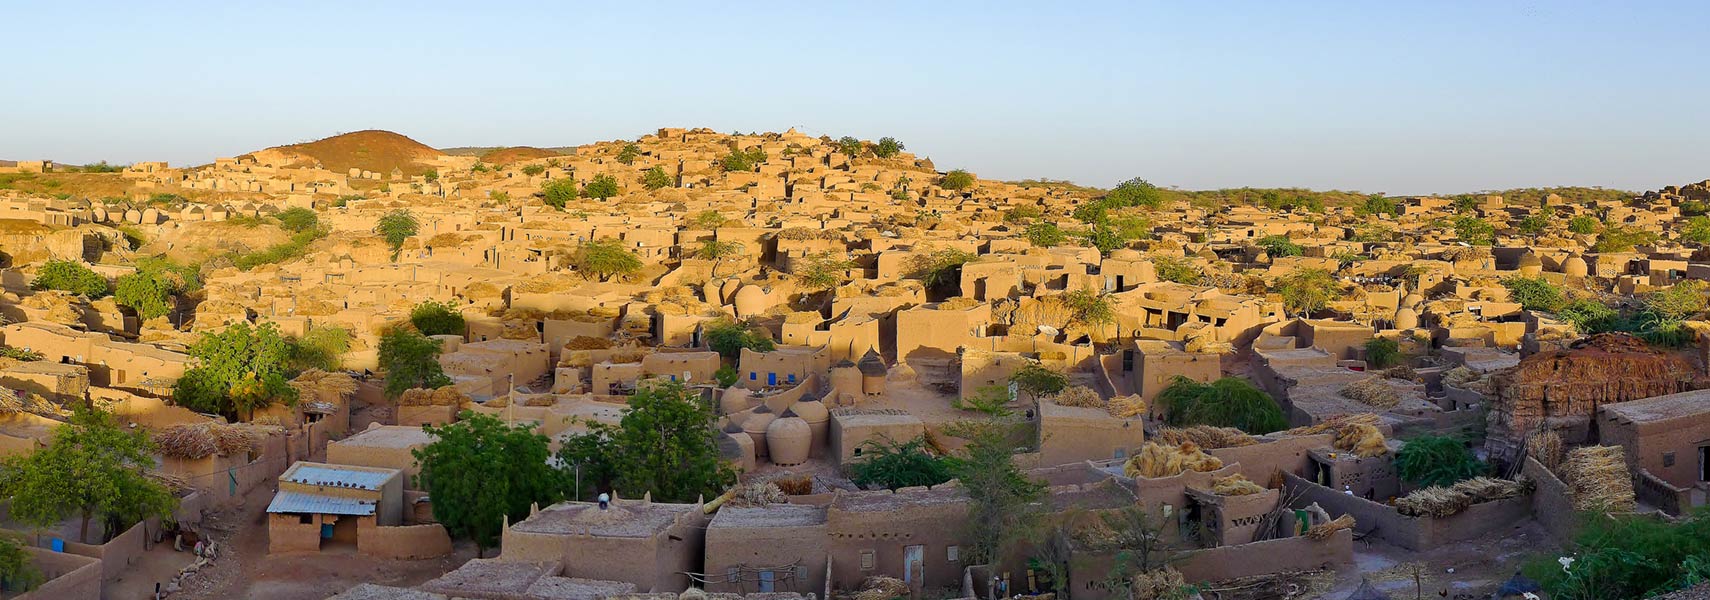 Panorama of Bouza village, Tahoua Region, Niger